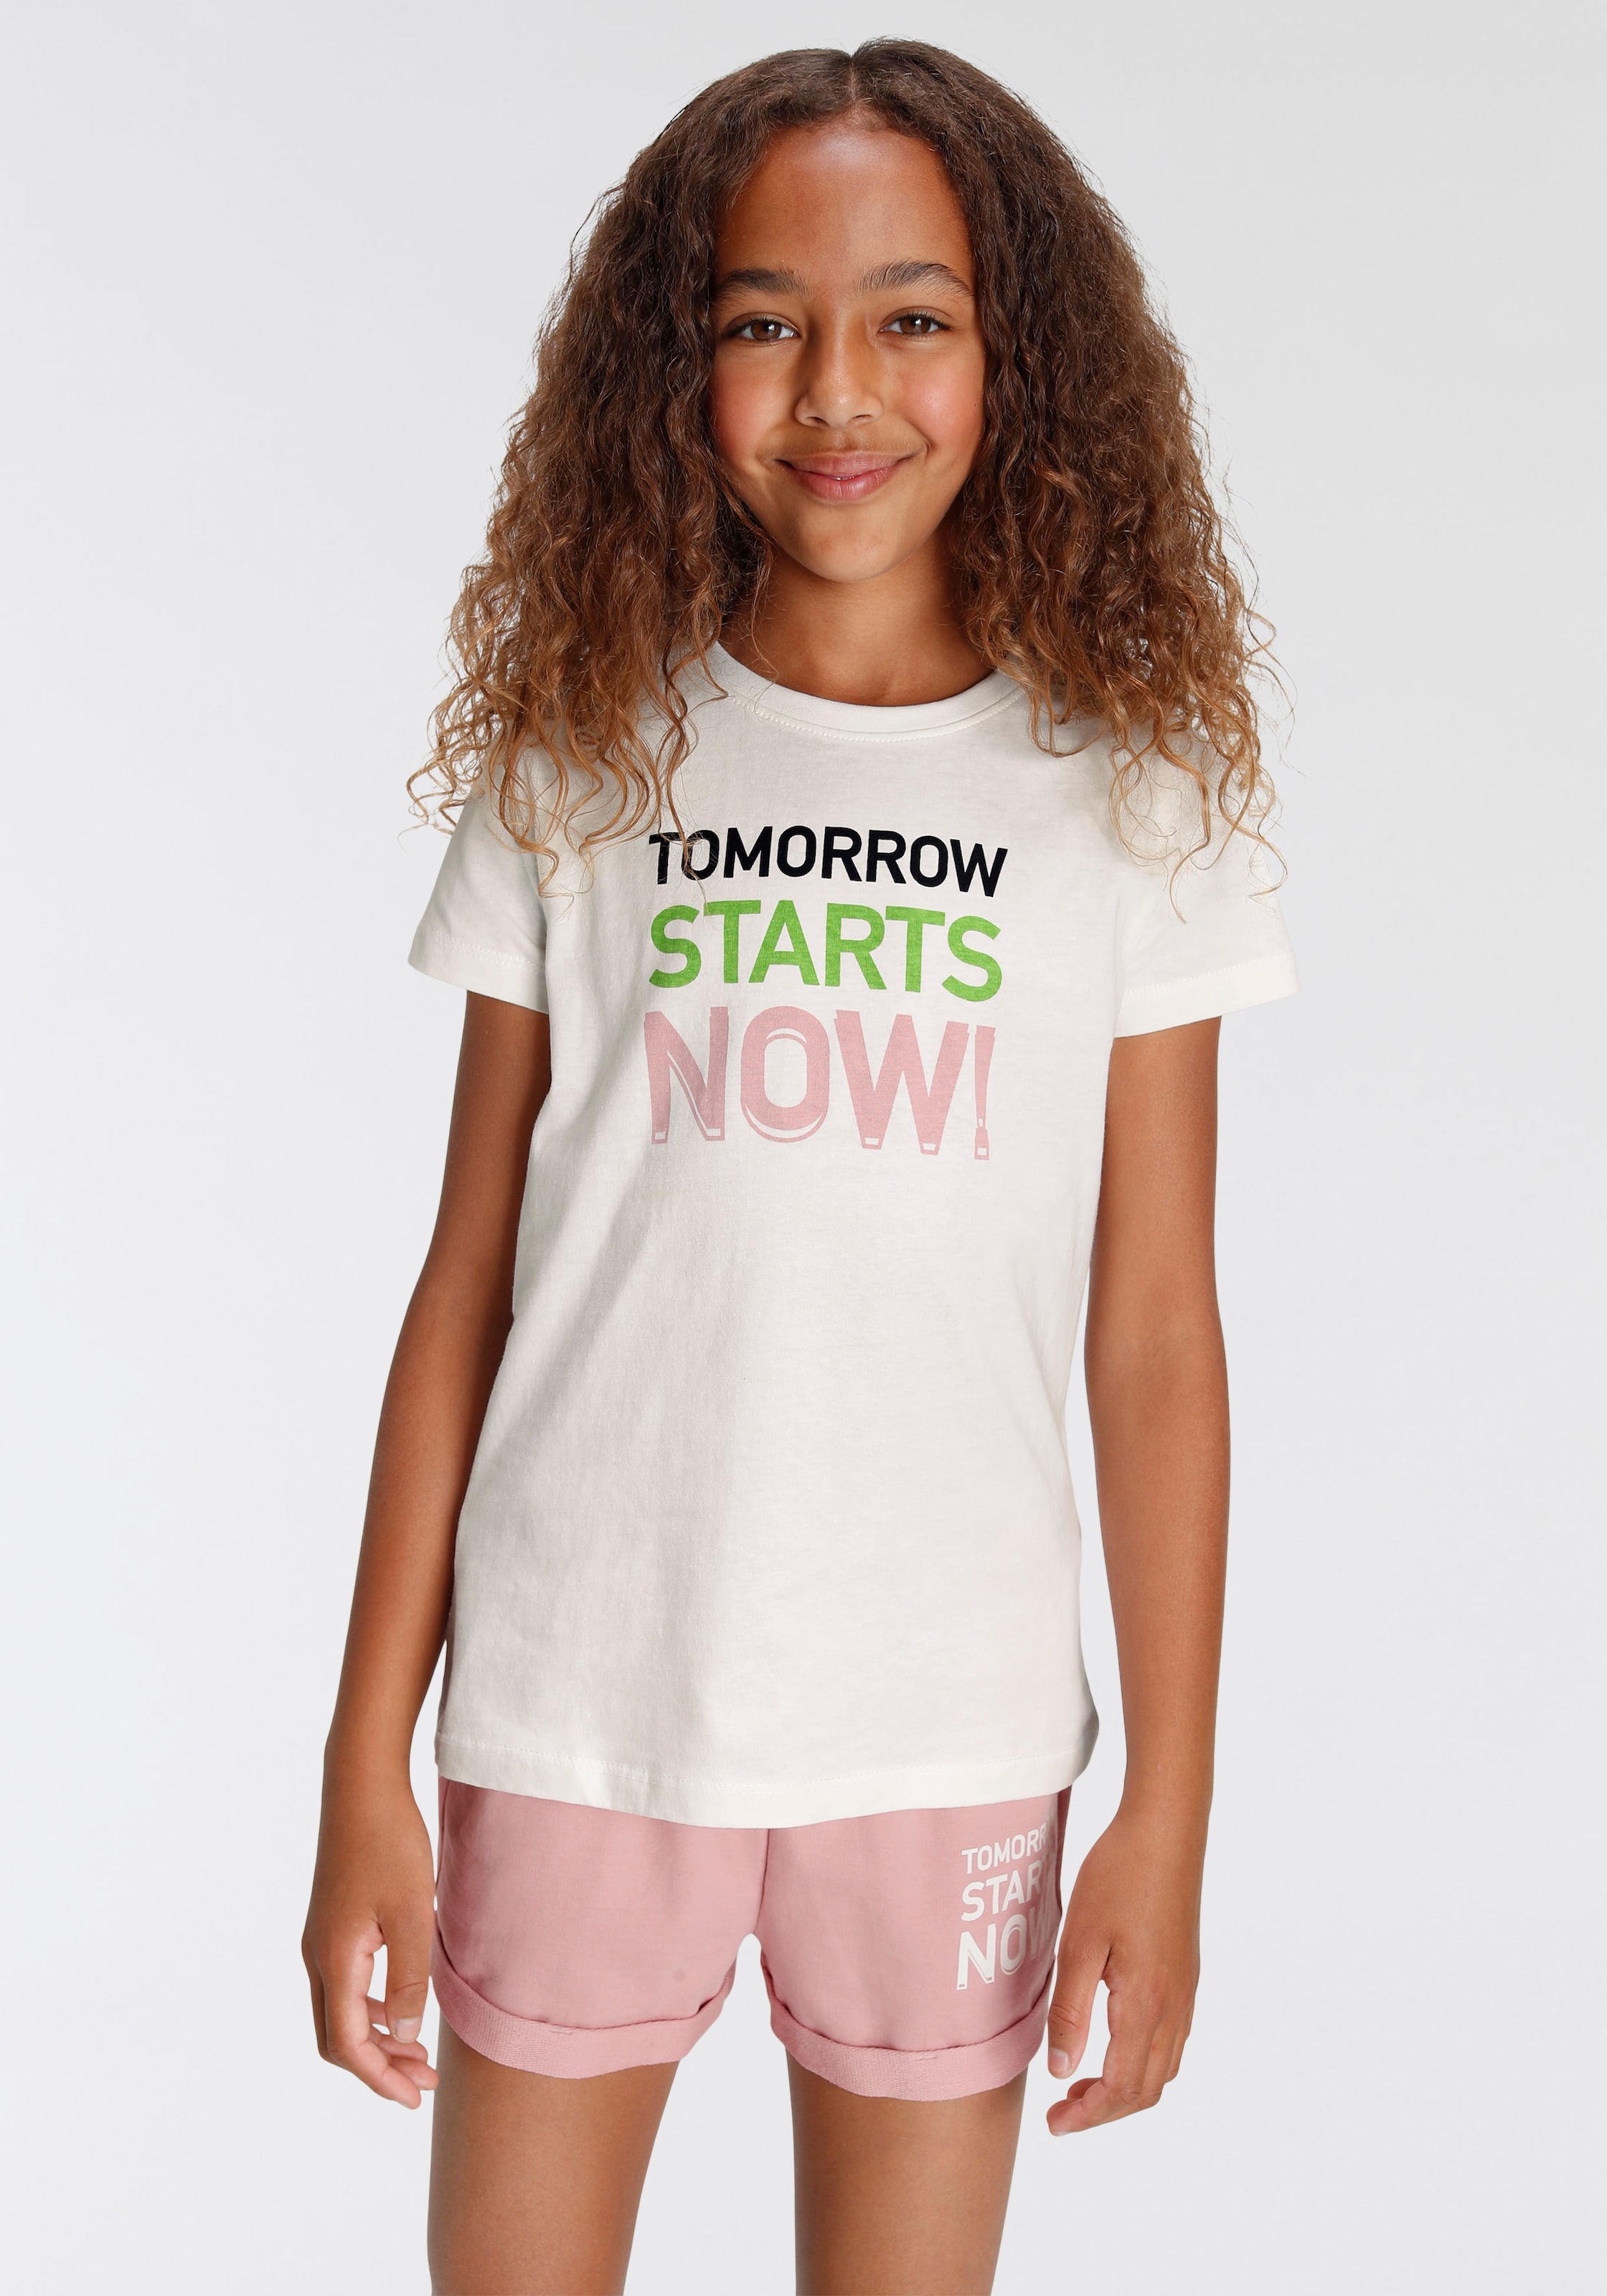 now!«, Druck T-Shirt | BAUR KIDSWORLD »Tomorrow starts